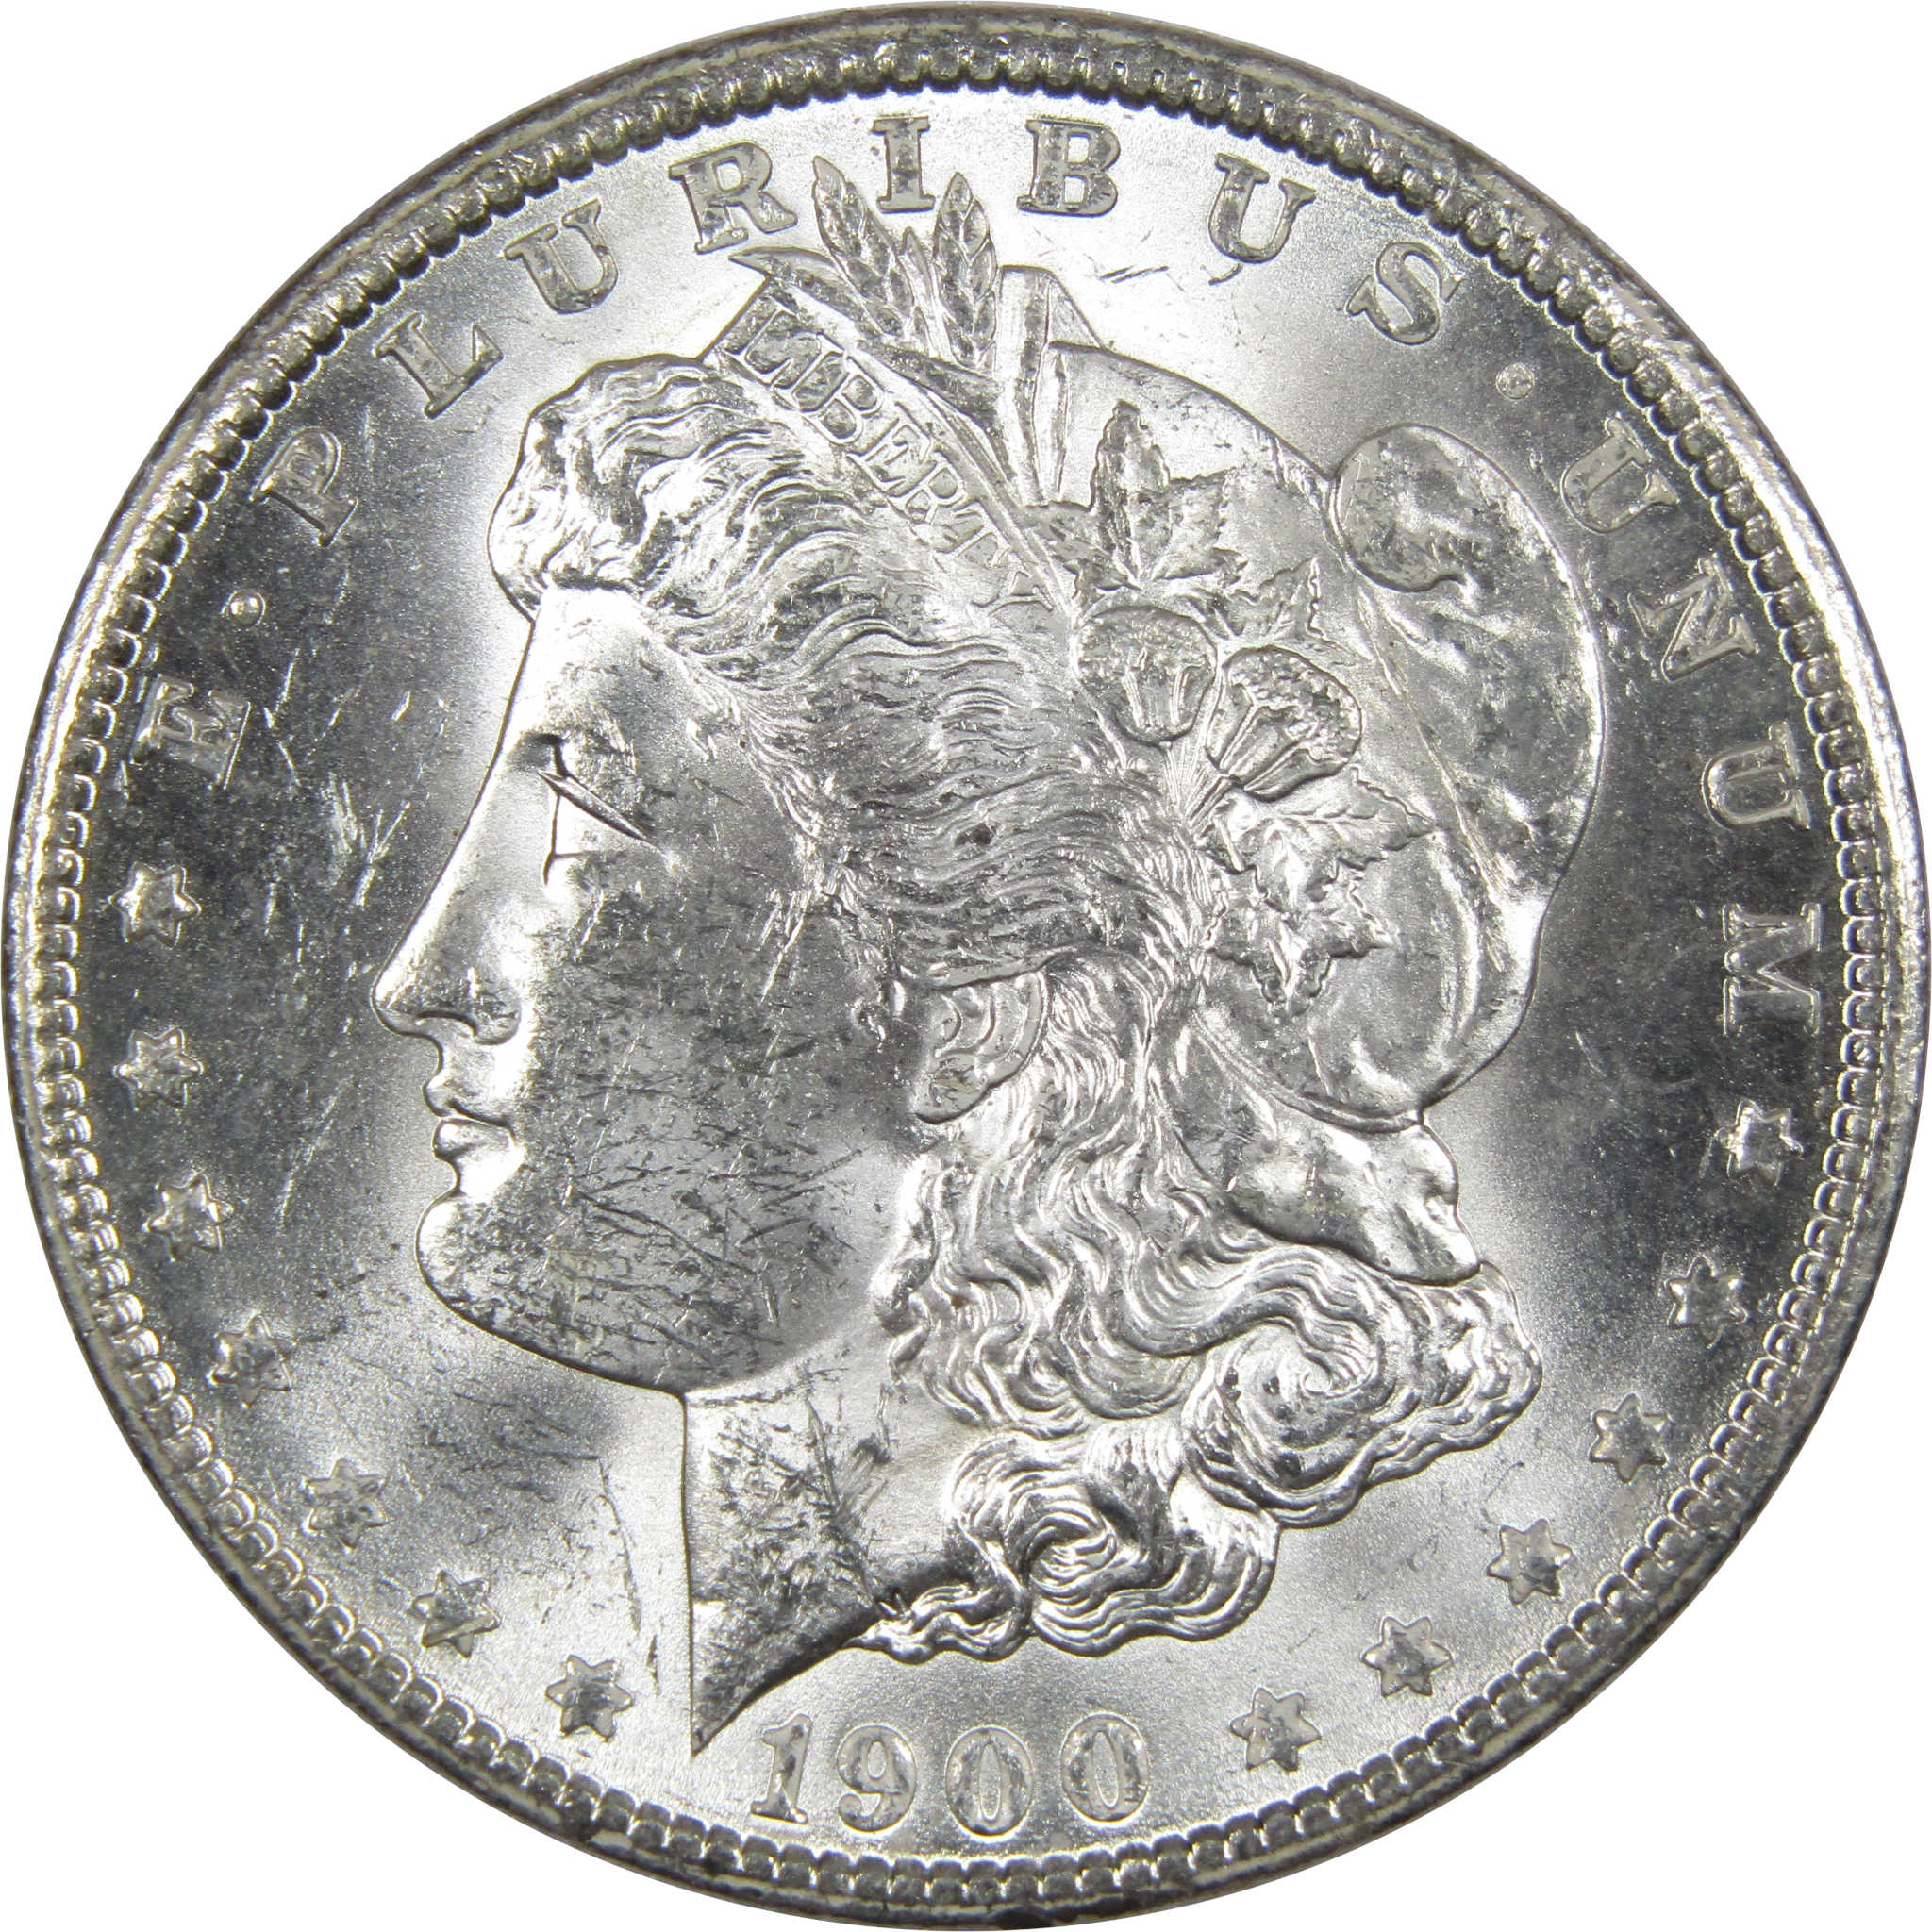 1900 O Morgan Dollar BU Uncirculated Mint State 90% Silver SKU:IPC9794 - Morgan coin - Morgan silver dollar - Morgan silver dollar for sale - Profile Coins &amp; Collectibles